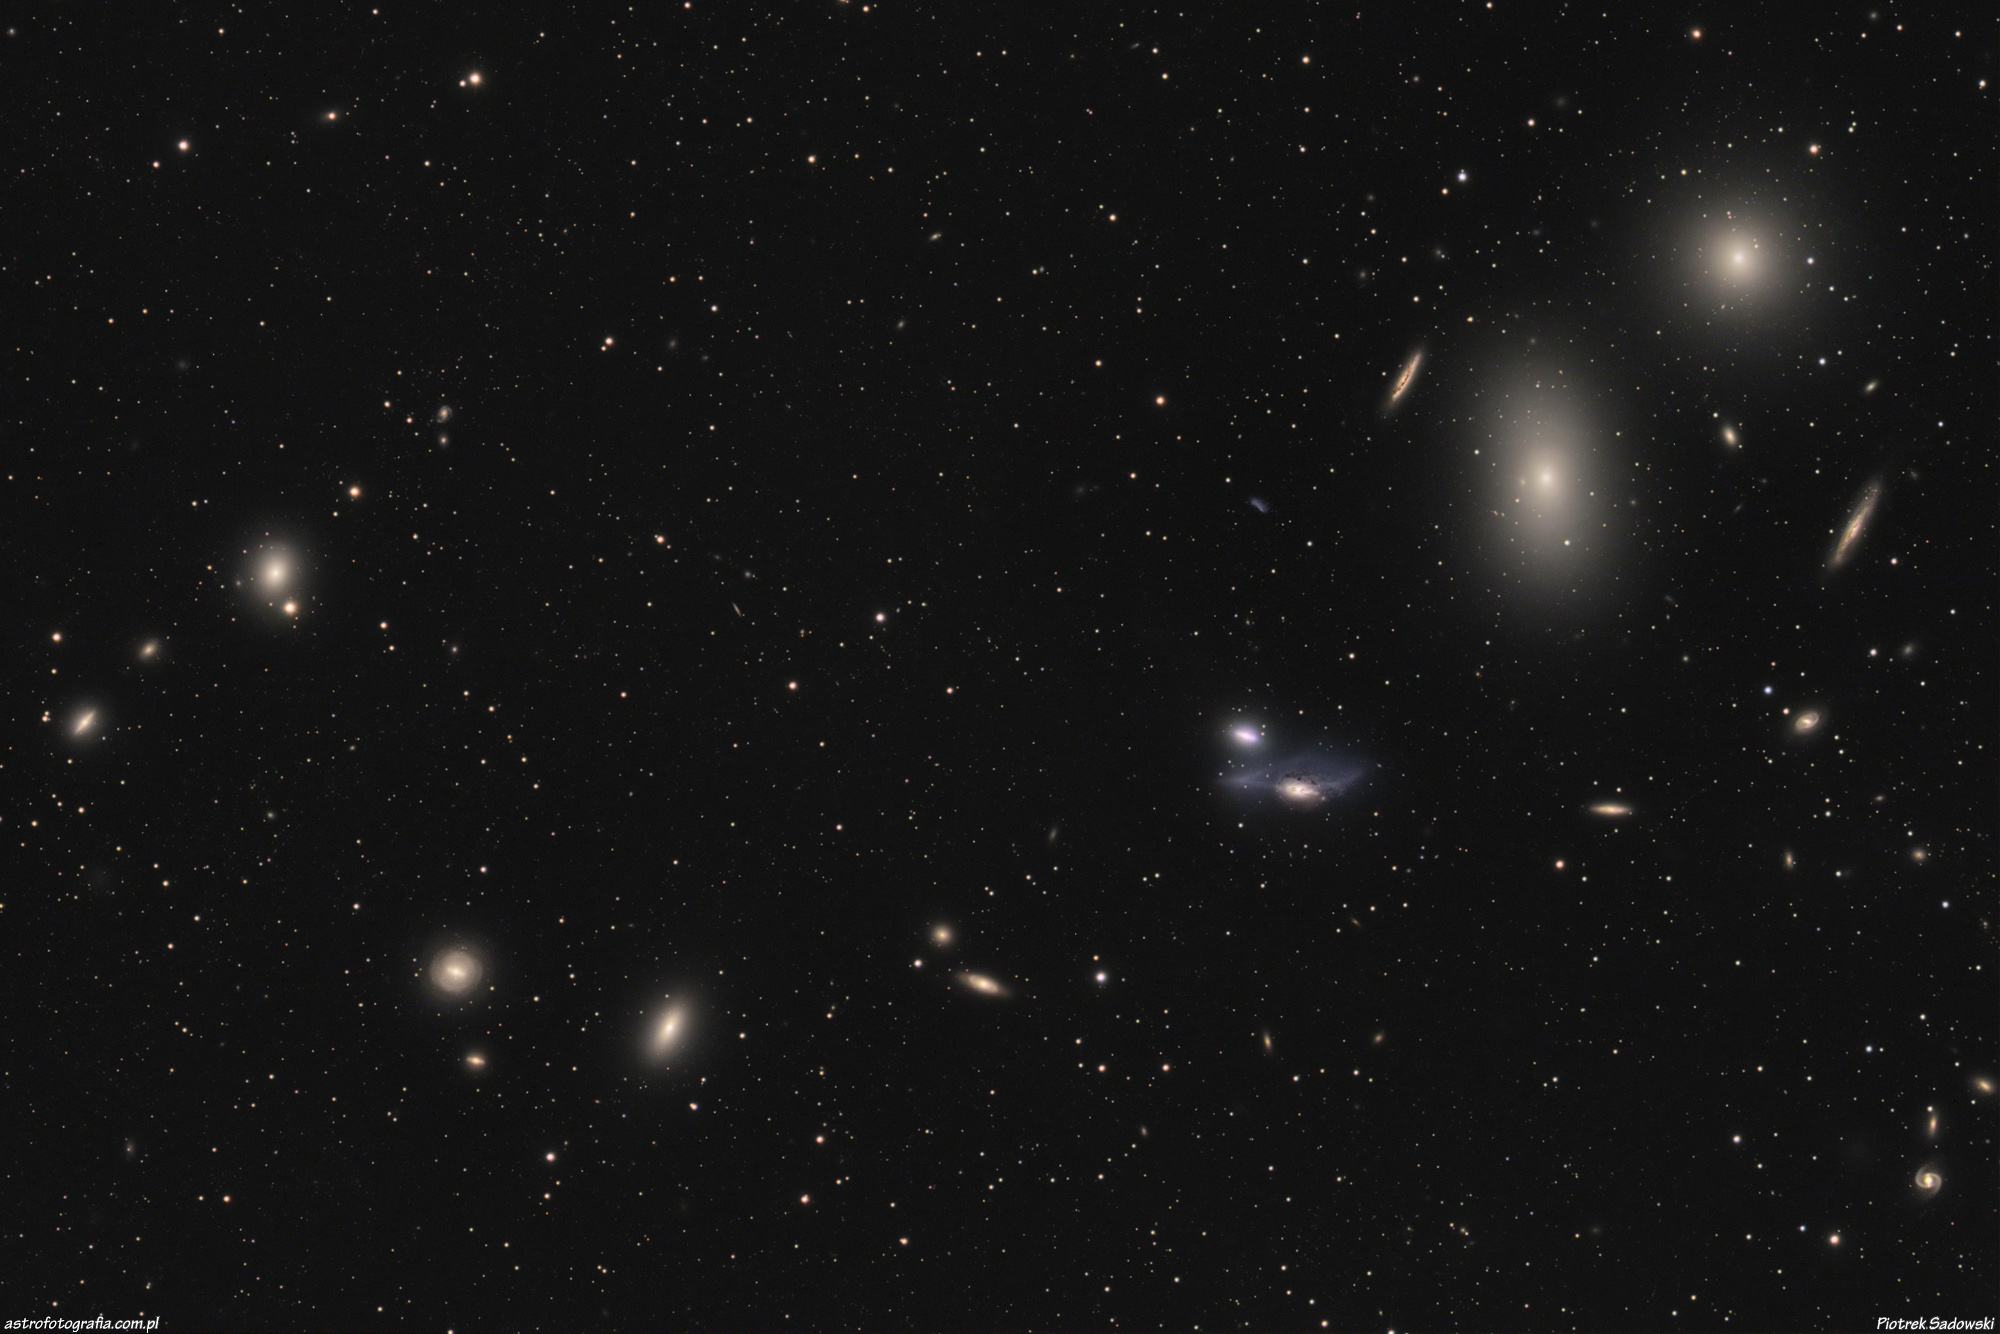 Cepochka galaktik Markaryana